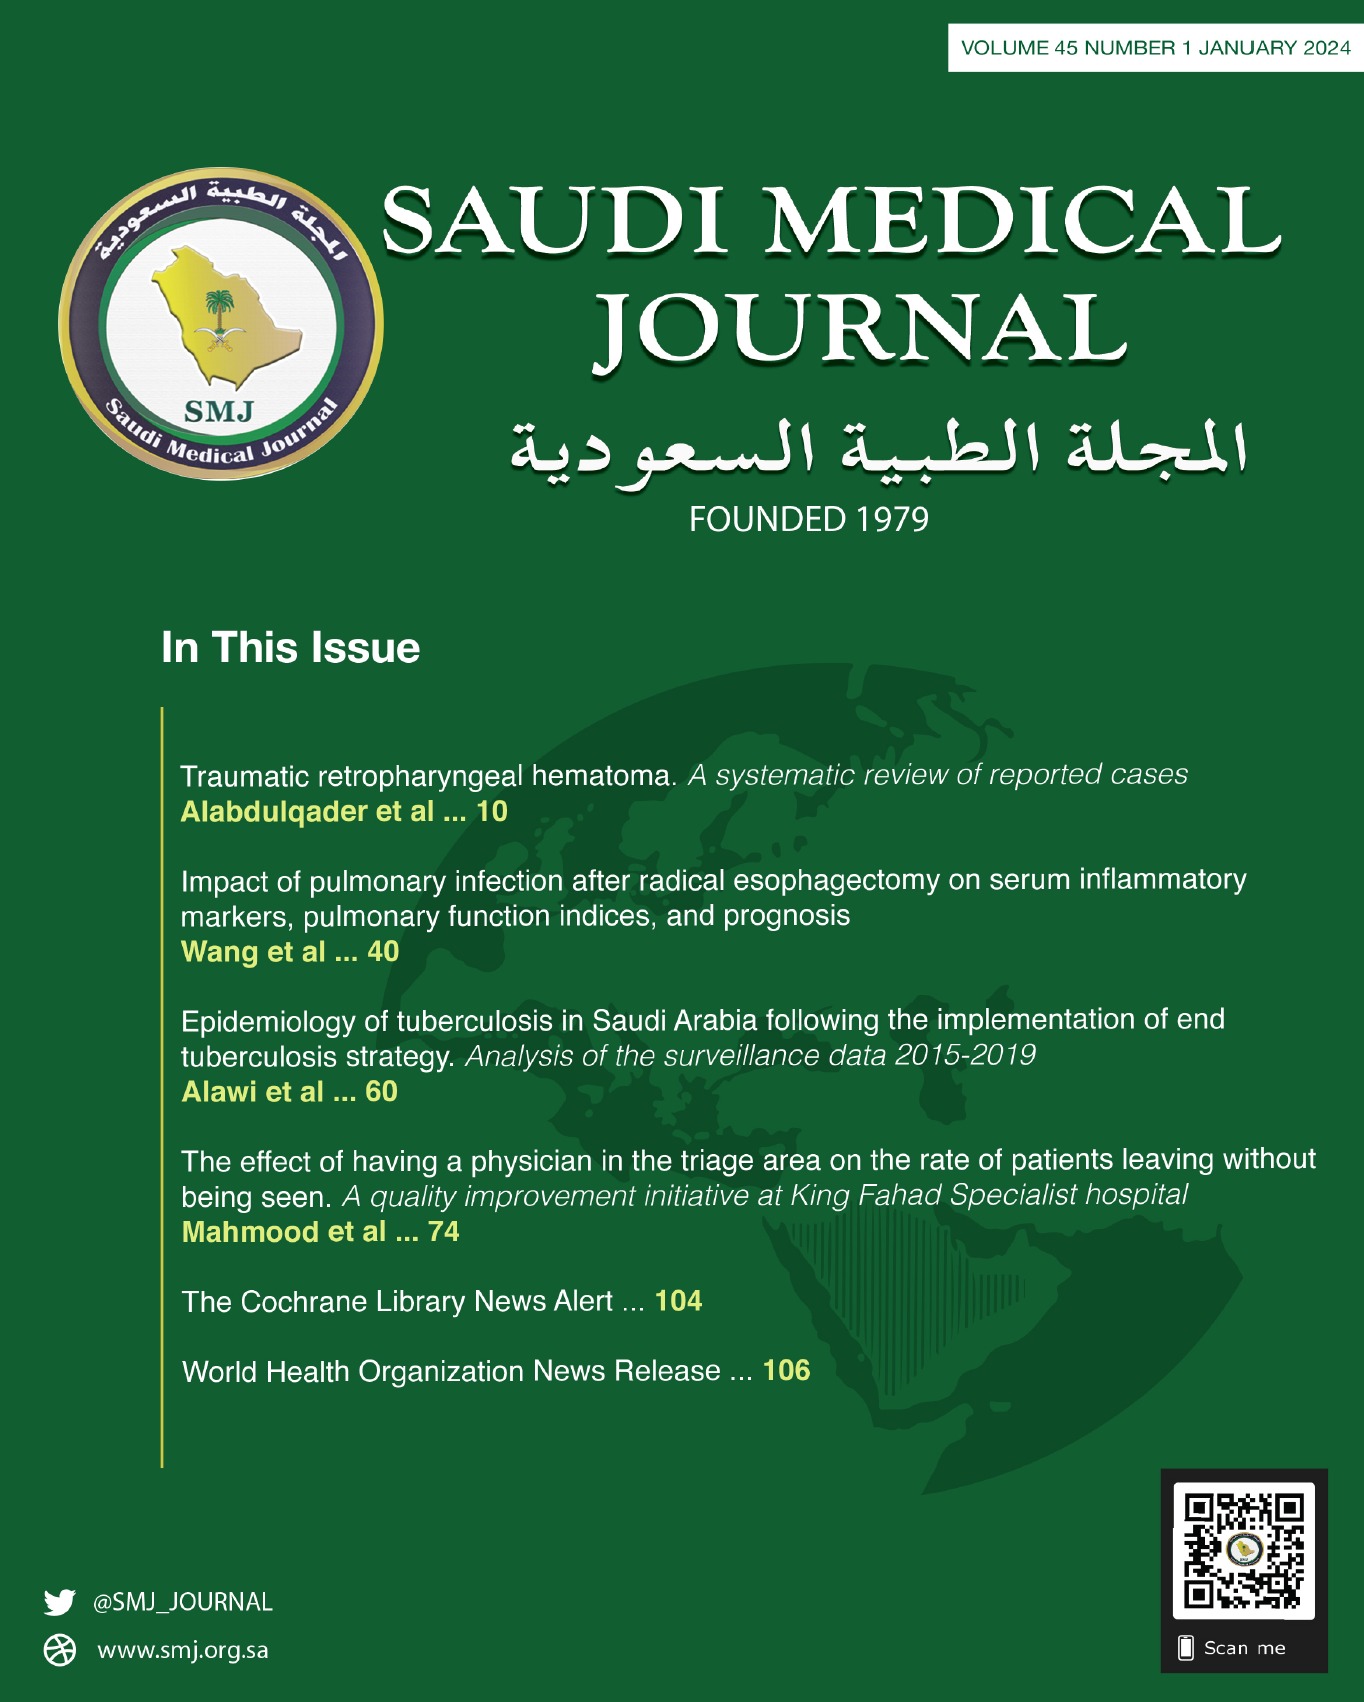 The prevalence of extracranial carotid atherosclerosis detected via ultrasound imaging: A single-centre study in Jeddah, Saudi Arabia